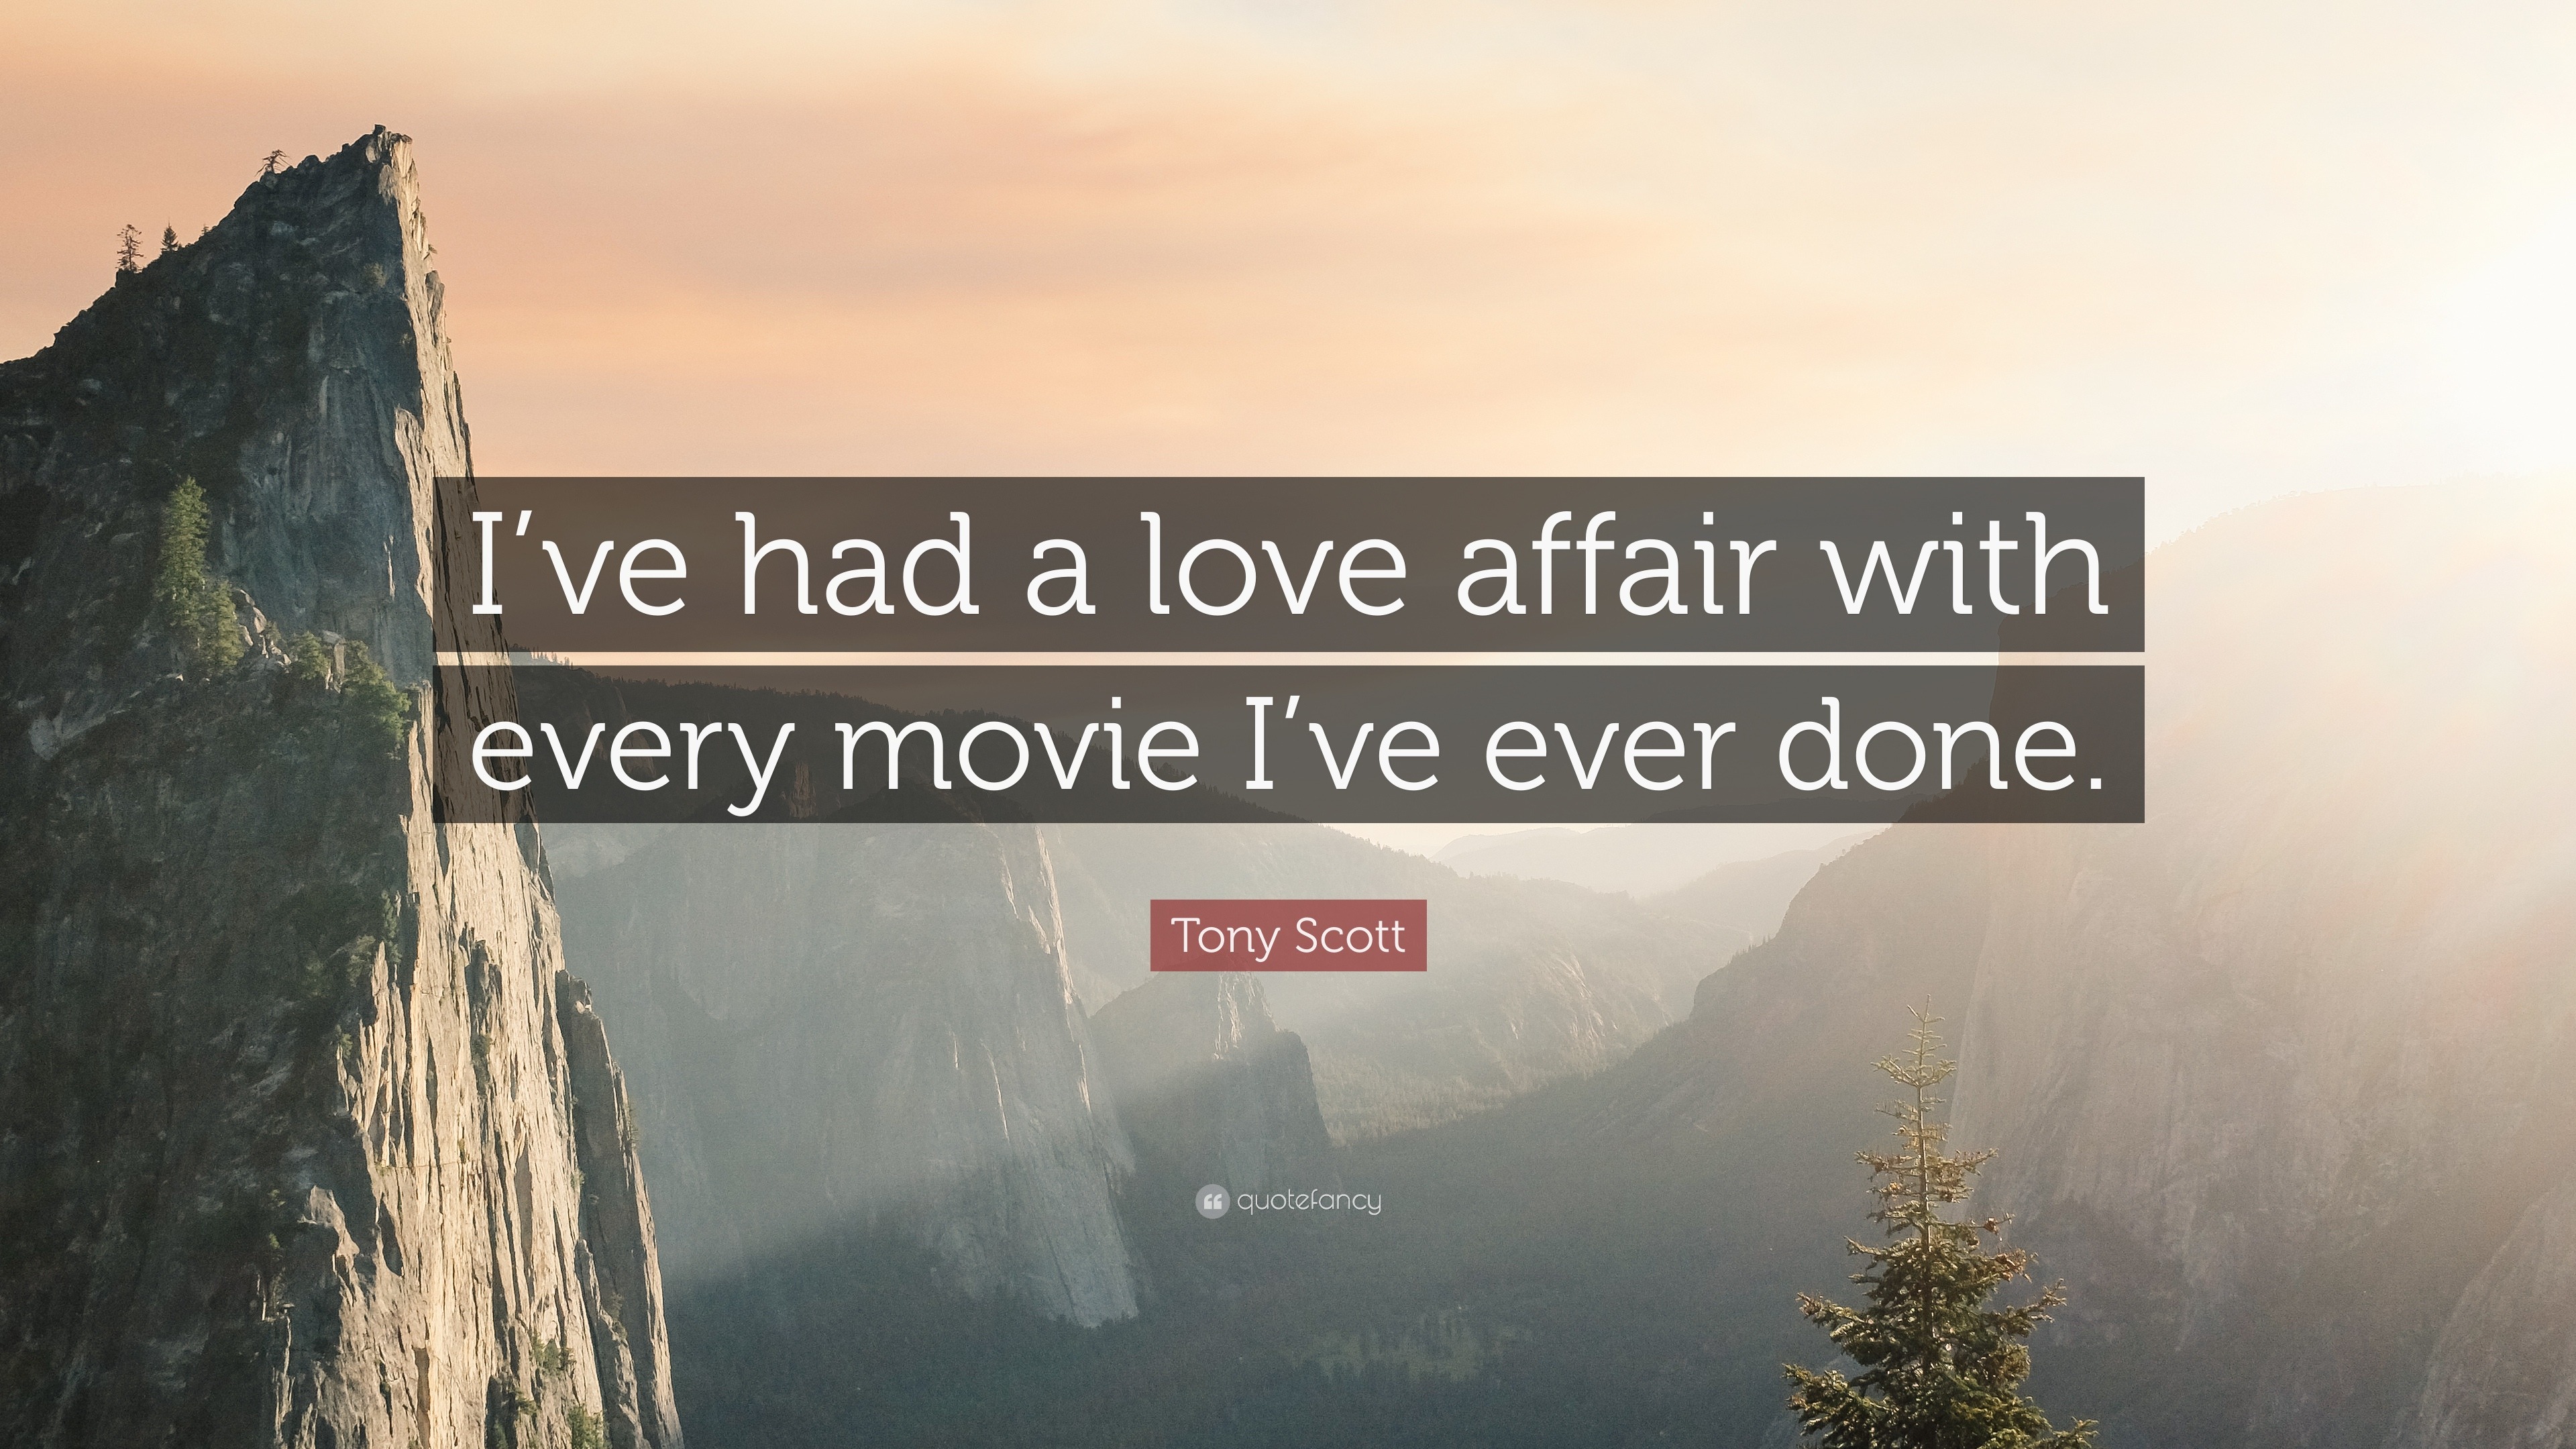 Tony Scott Quote “I ve had a love affair with every movie I